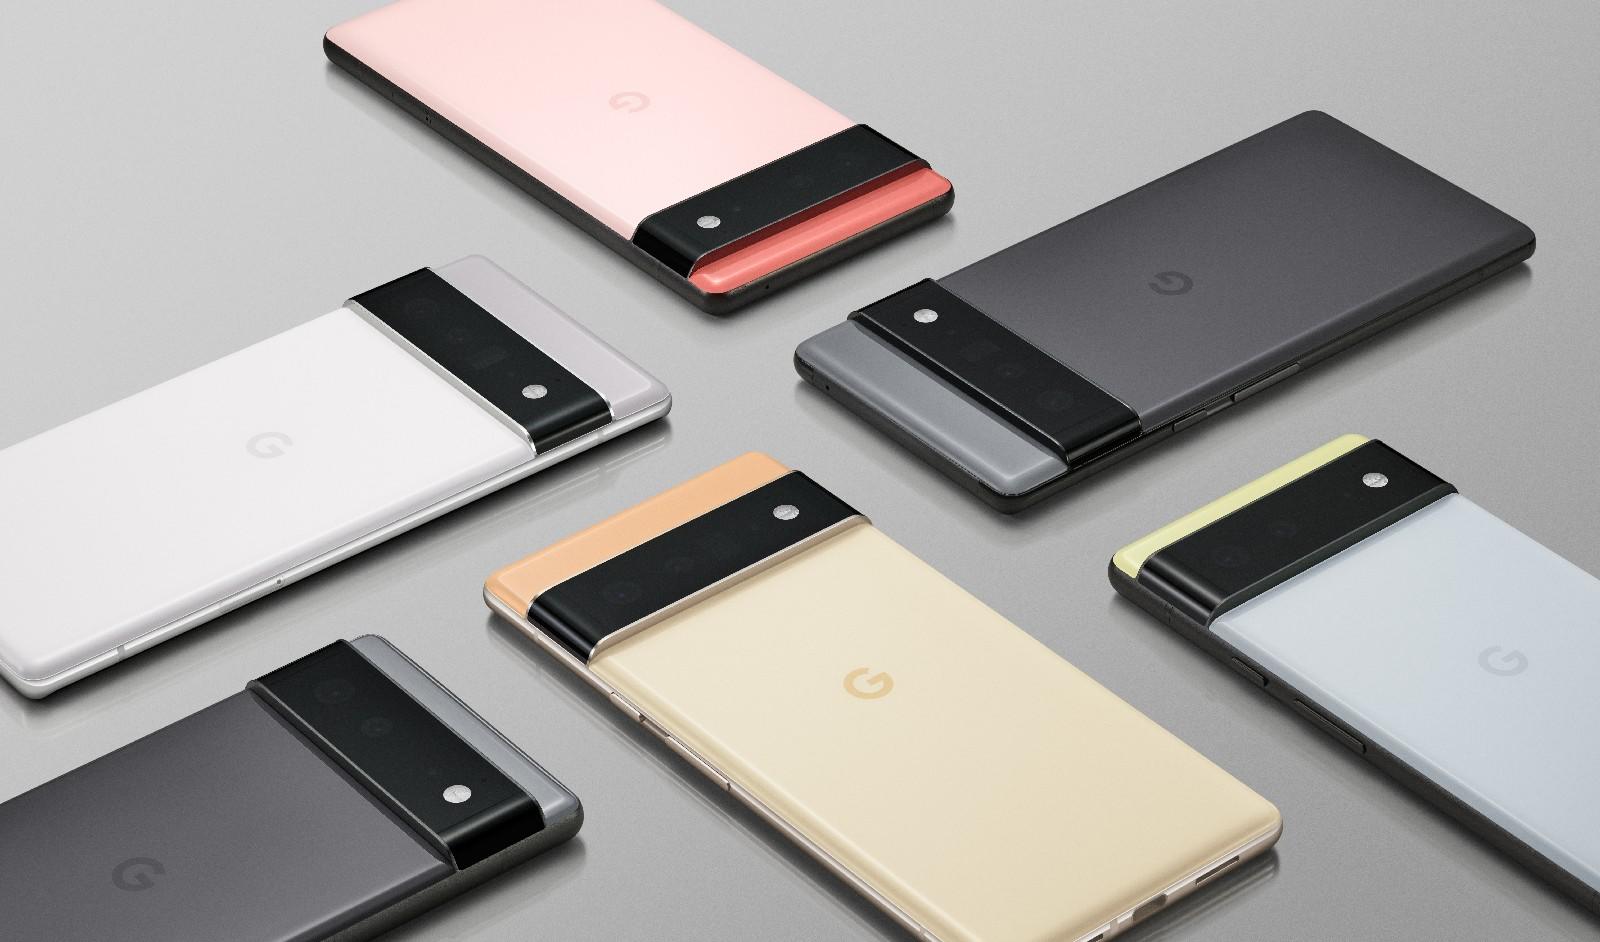 Google Pixel 6 in various colors